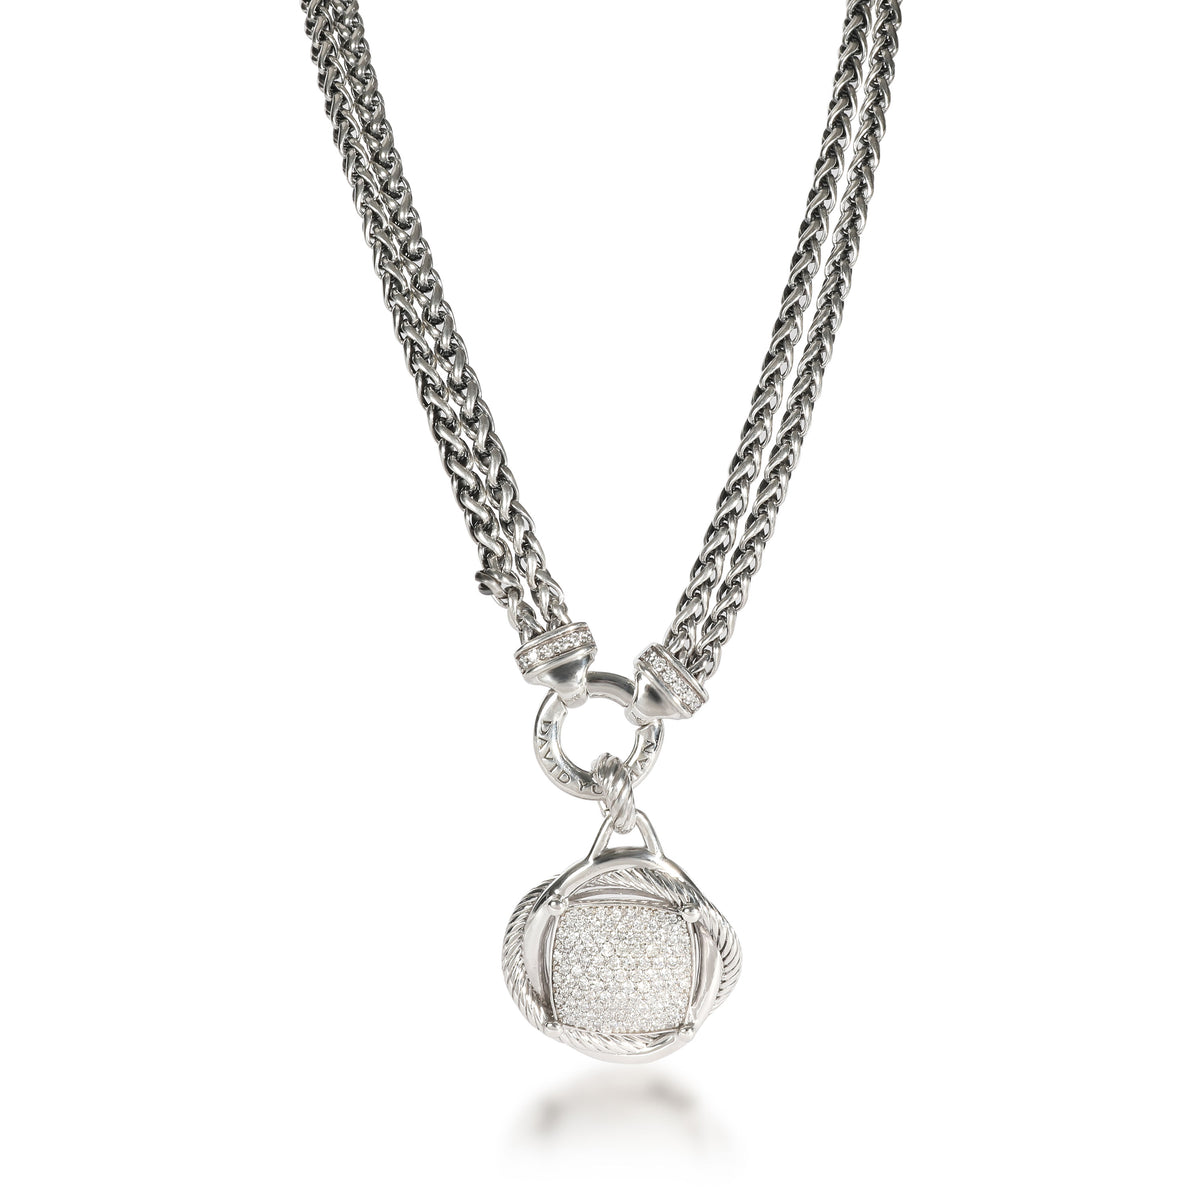 David Yurman Crossover Diamond Necklace in  Sterling Silver 1.69 CTW